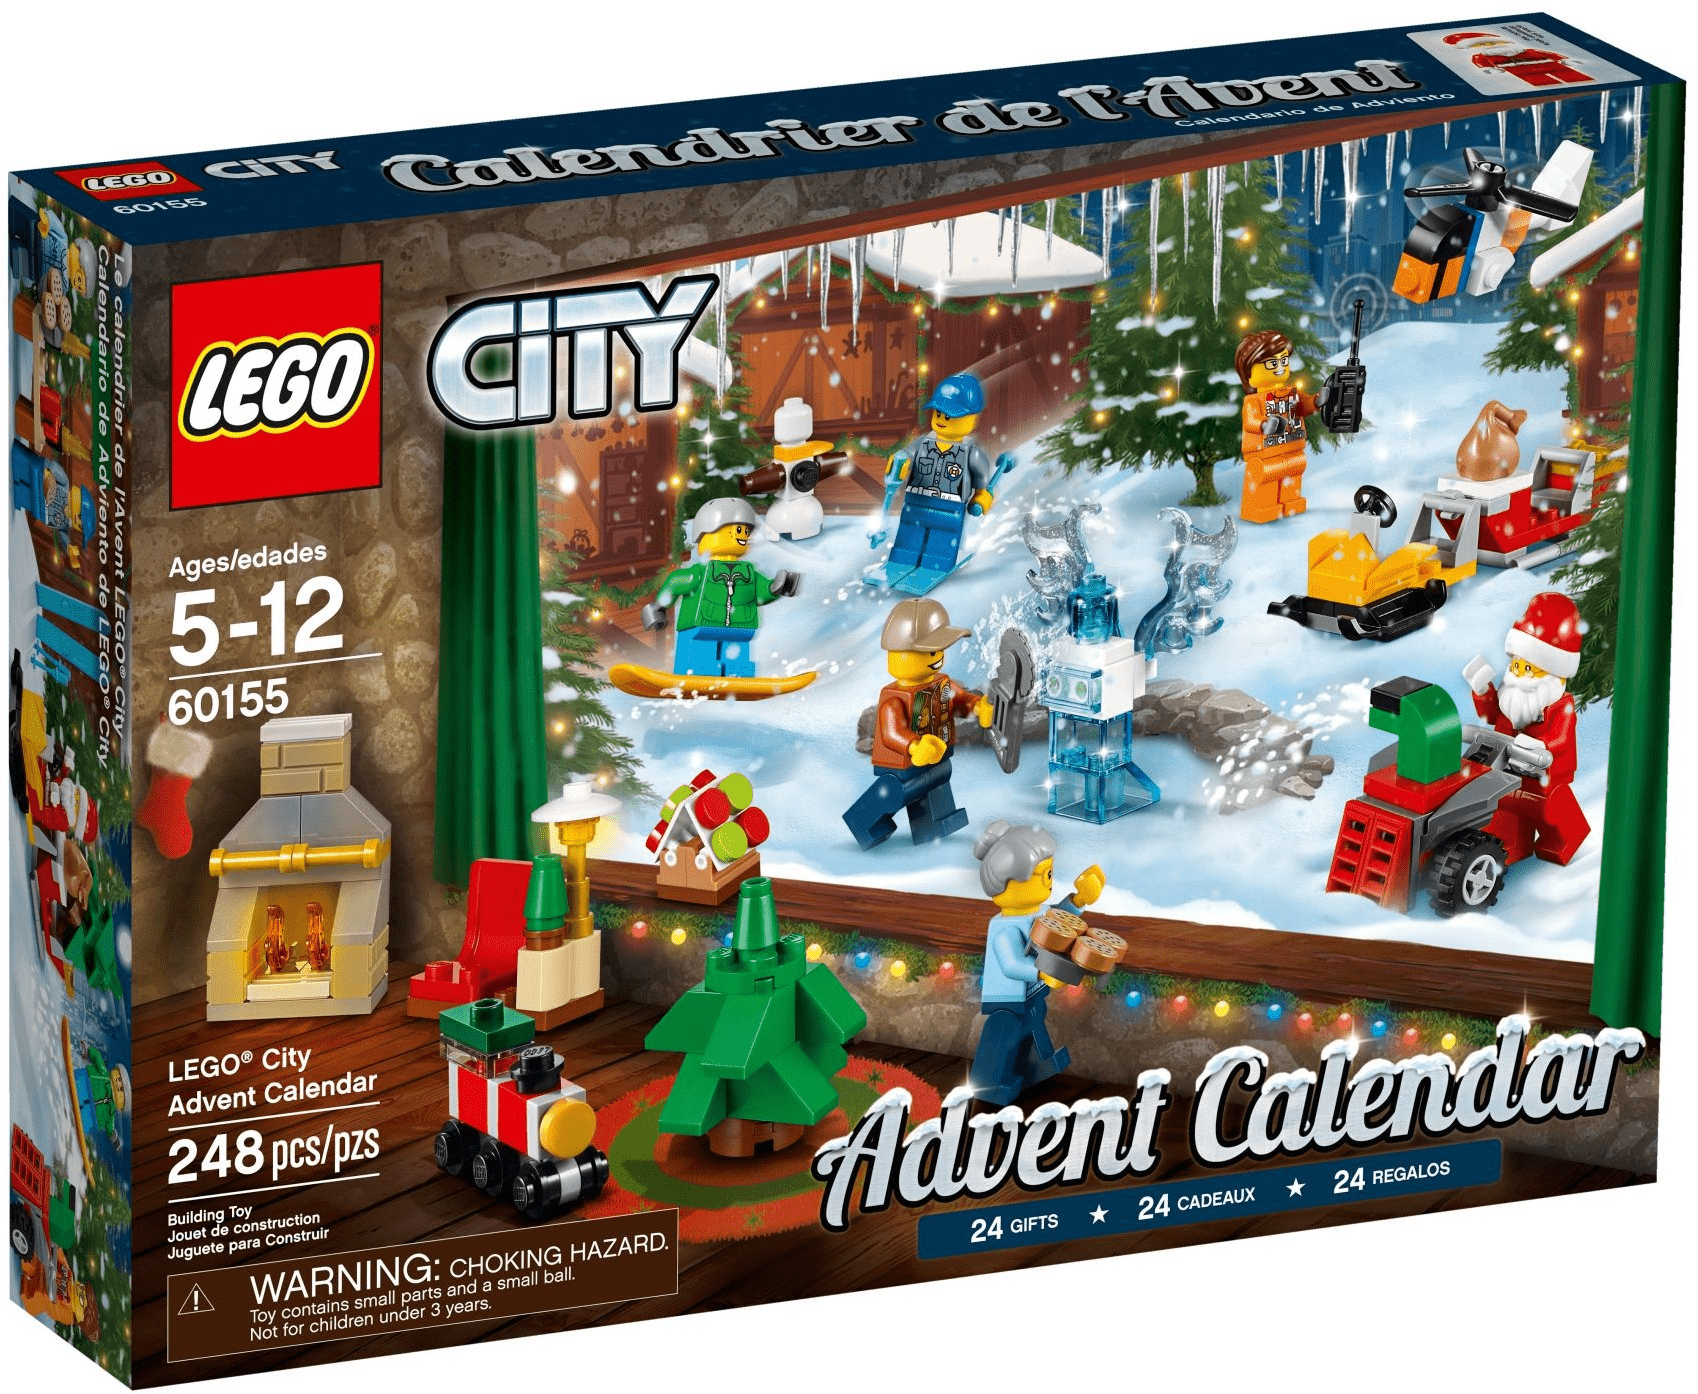 Lego 2017 Advent Calendars Available Now! Star City Town! - Subscription